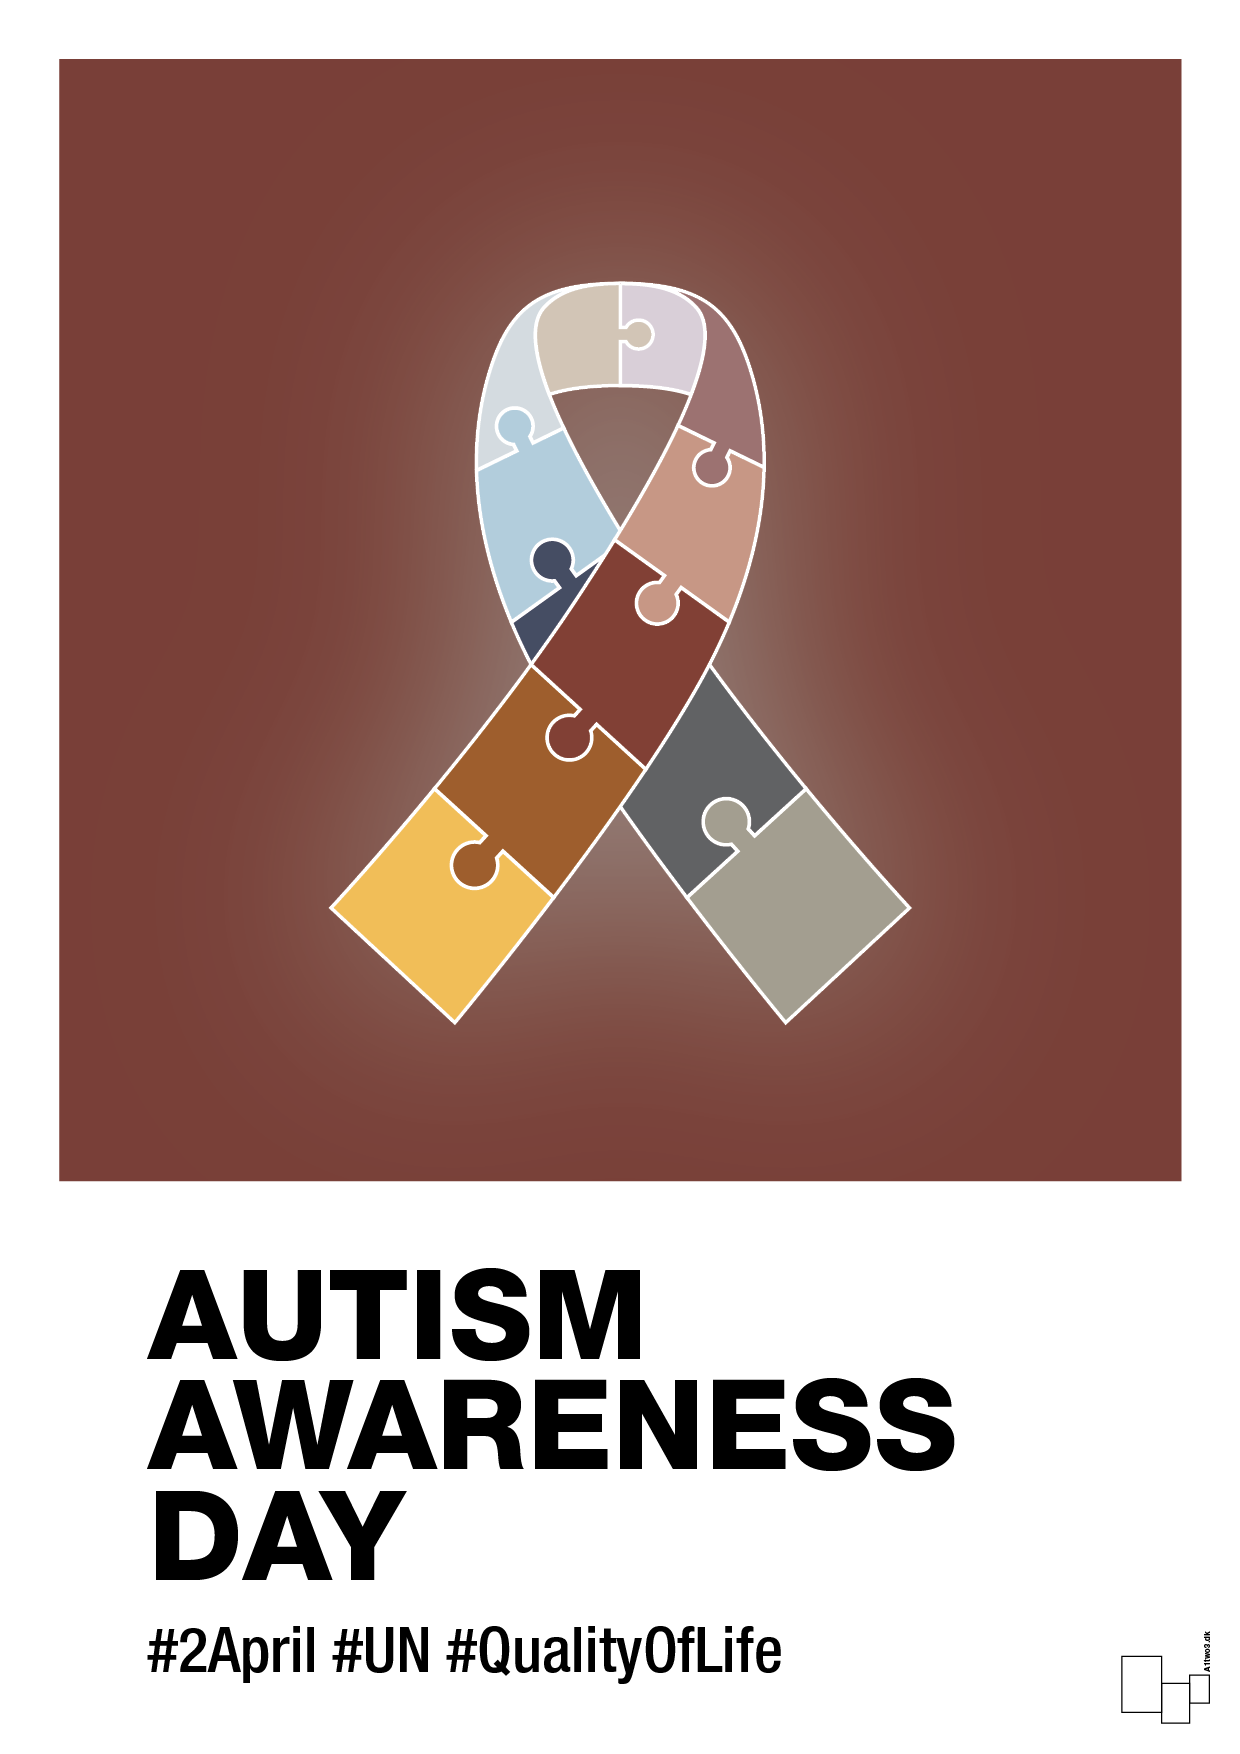 autism awareness day in fullcolor - Plakat med Samfund i Red Pepper